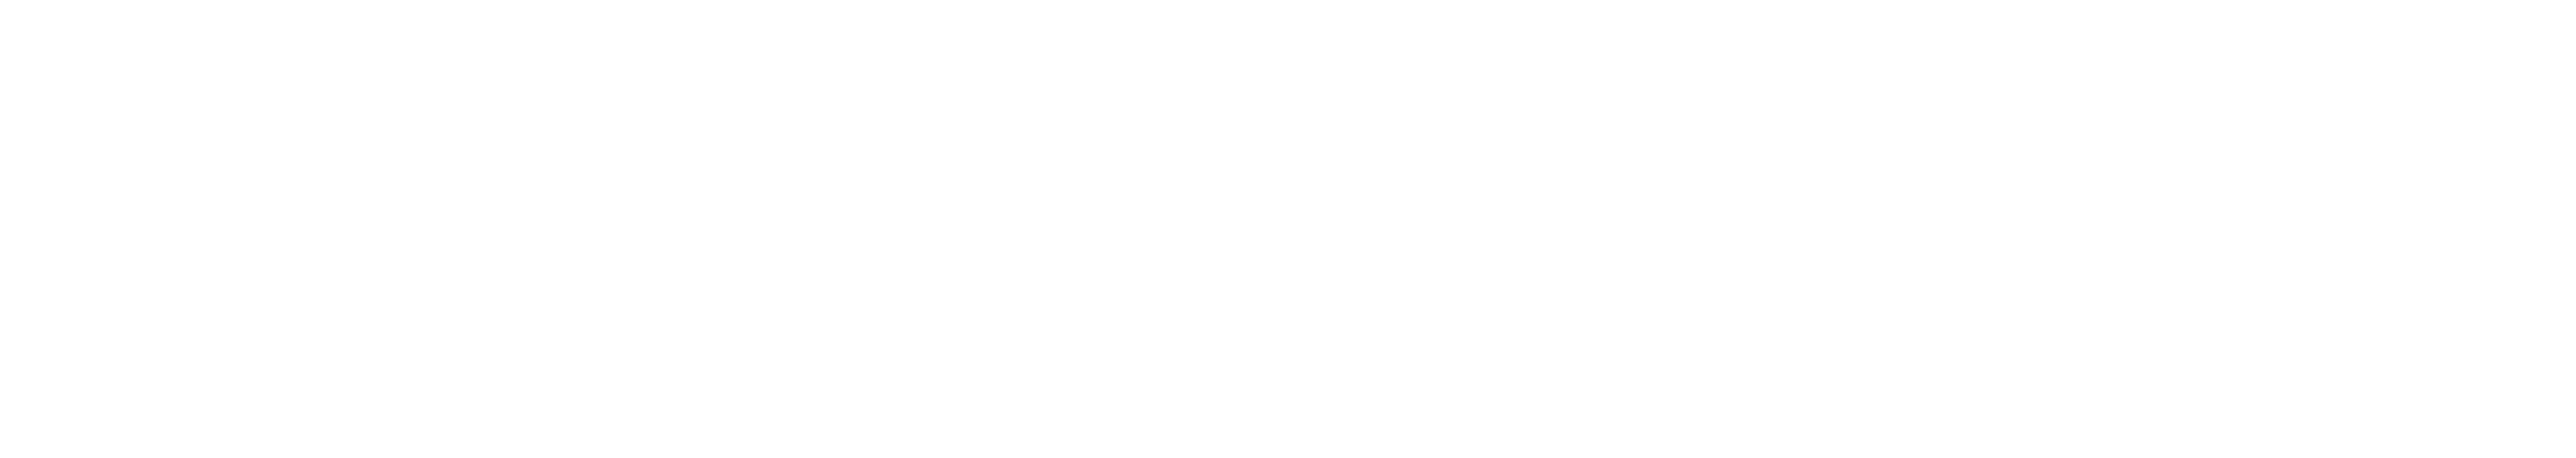 humm90-logo